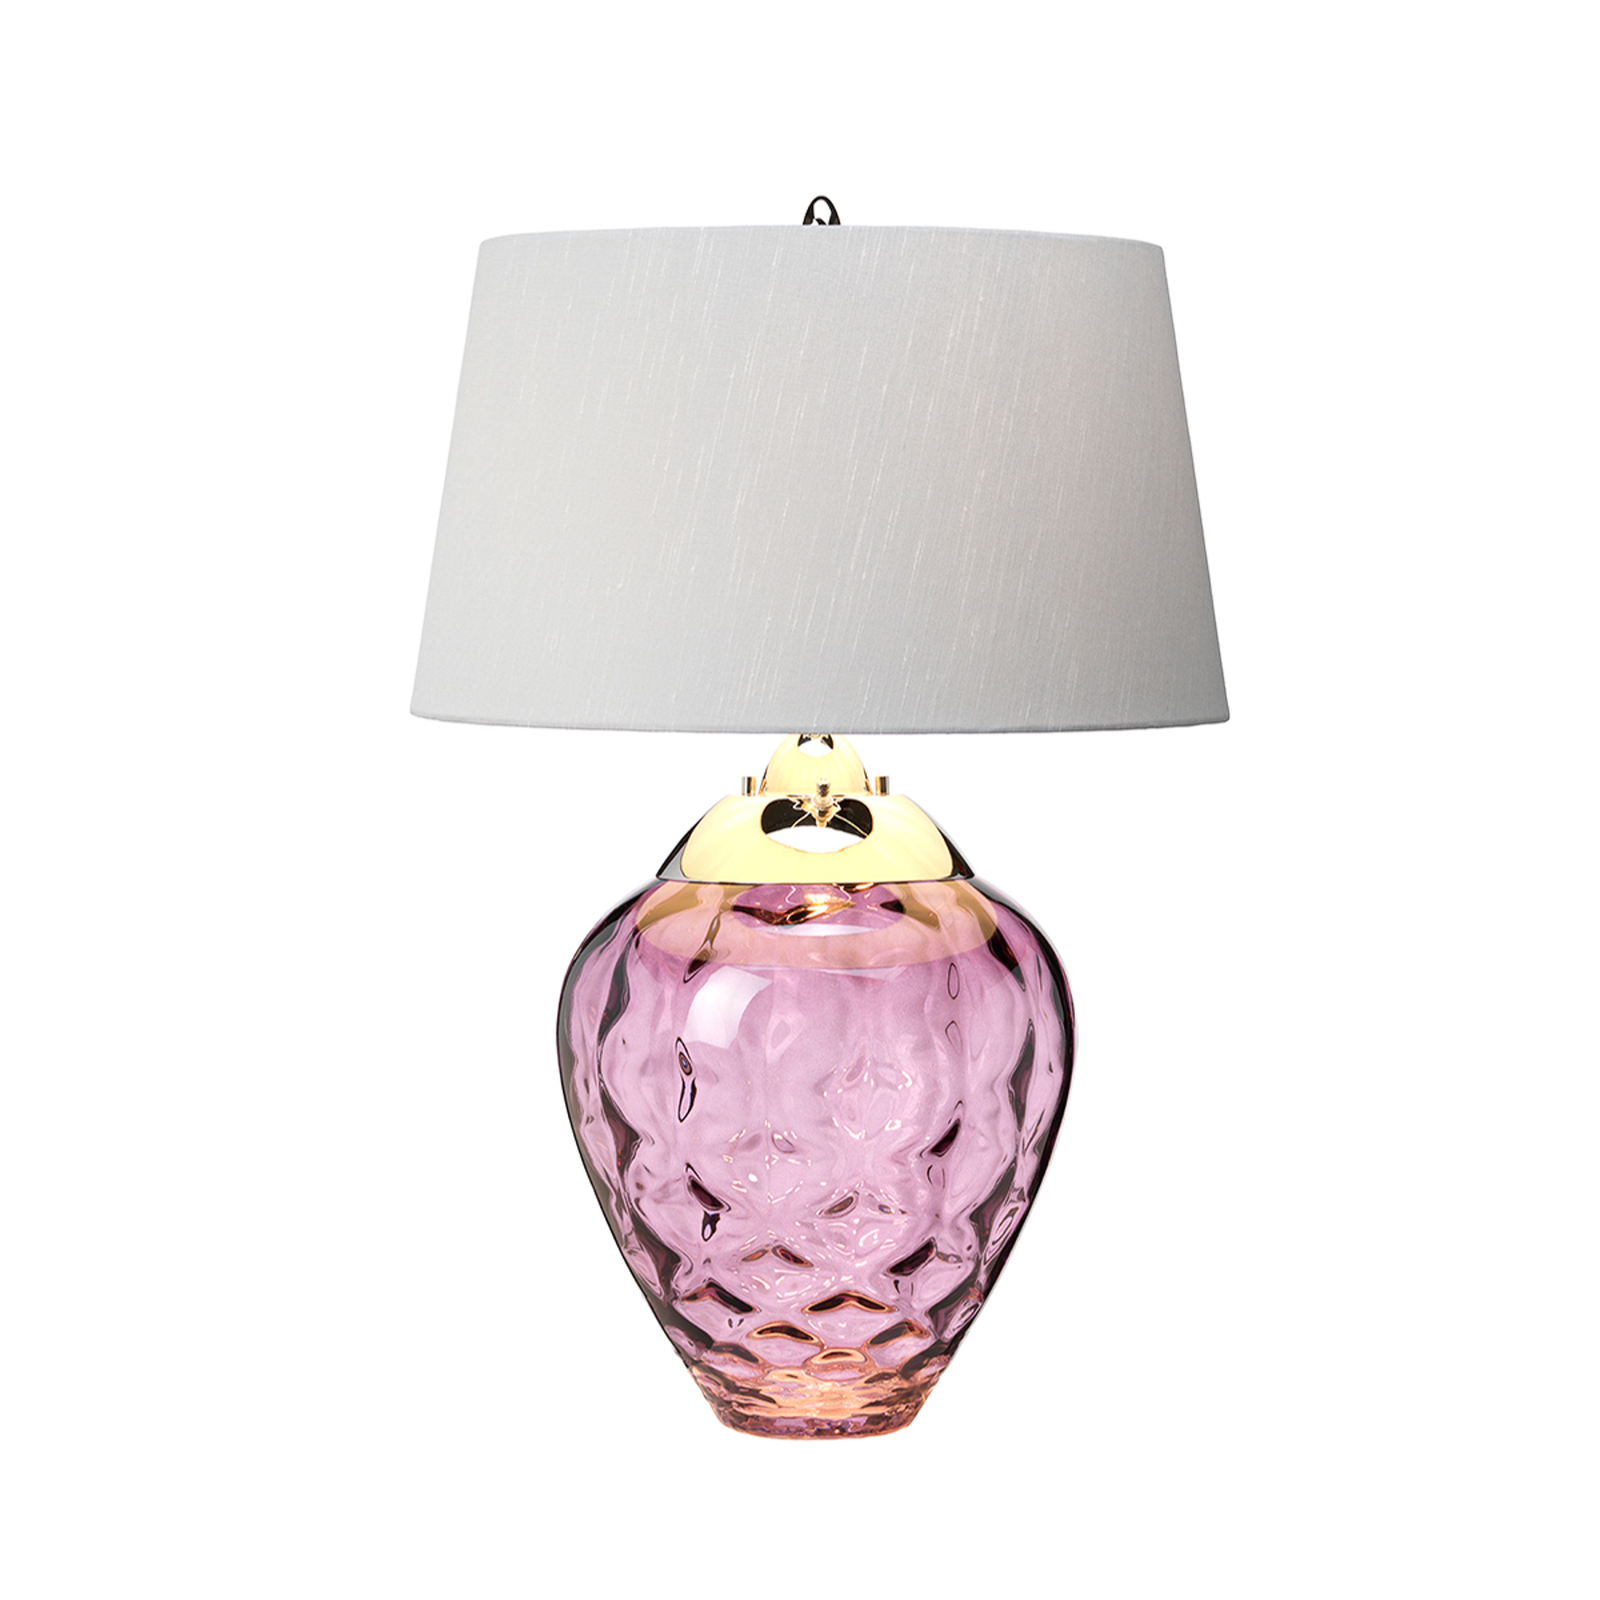 Samara table lamp, Ø 45.7 cm, pink, fabric, glass, 2-bulb